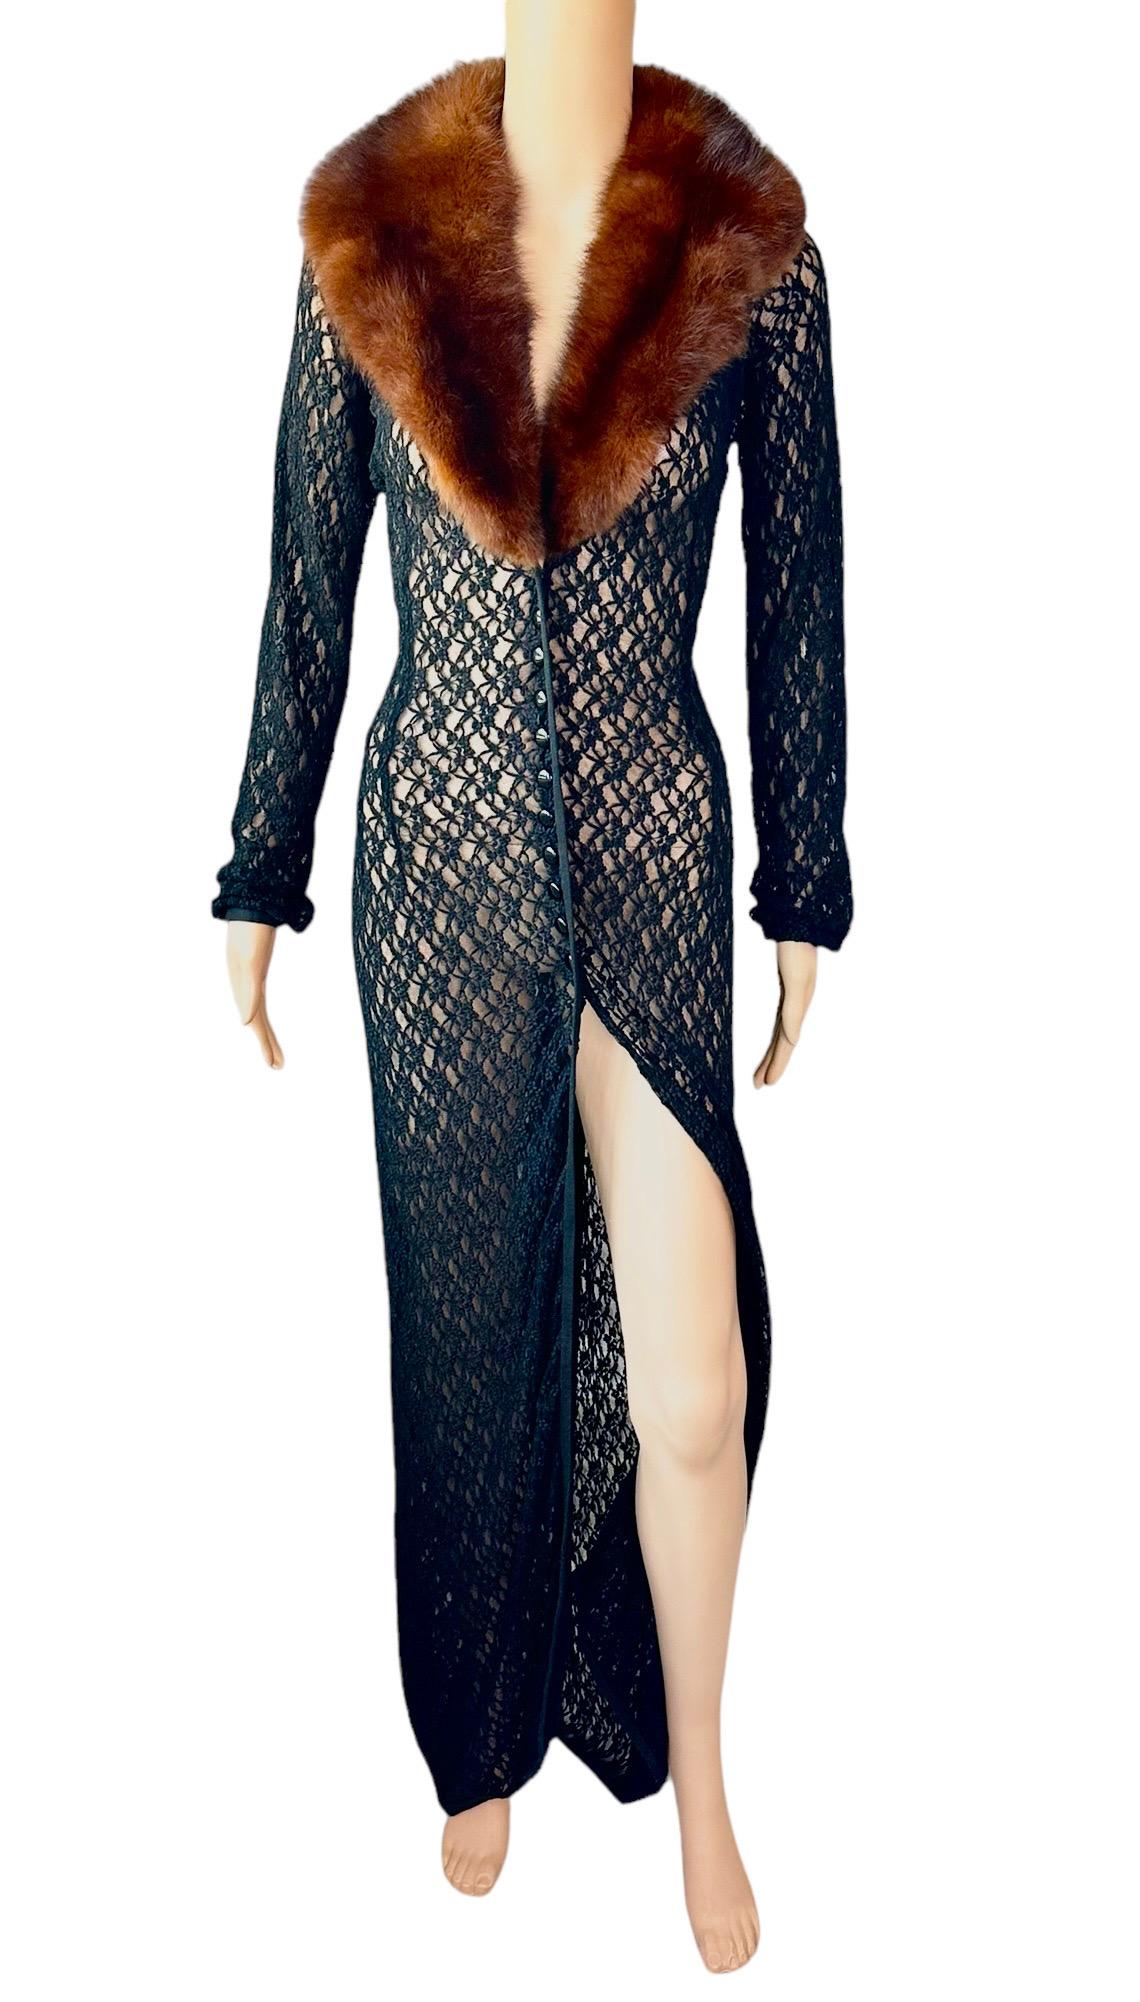 Women's or Men's Dolce & Gabbana S/S 1997 Sable Fur Collar Sheer Knit Black Cardigan Coat Dress